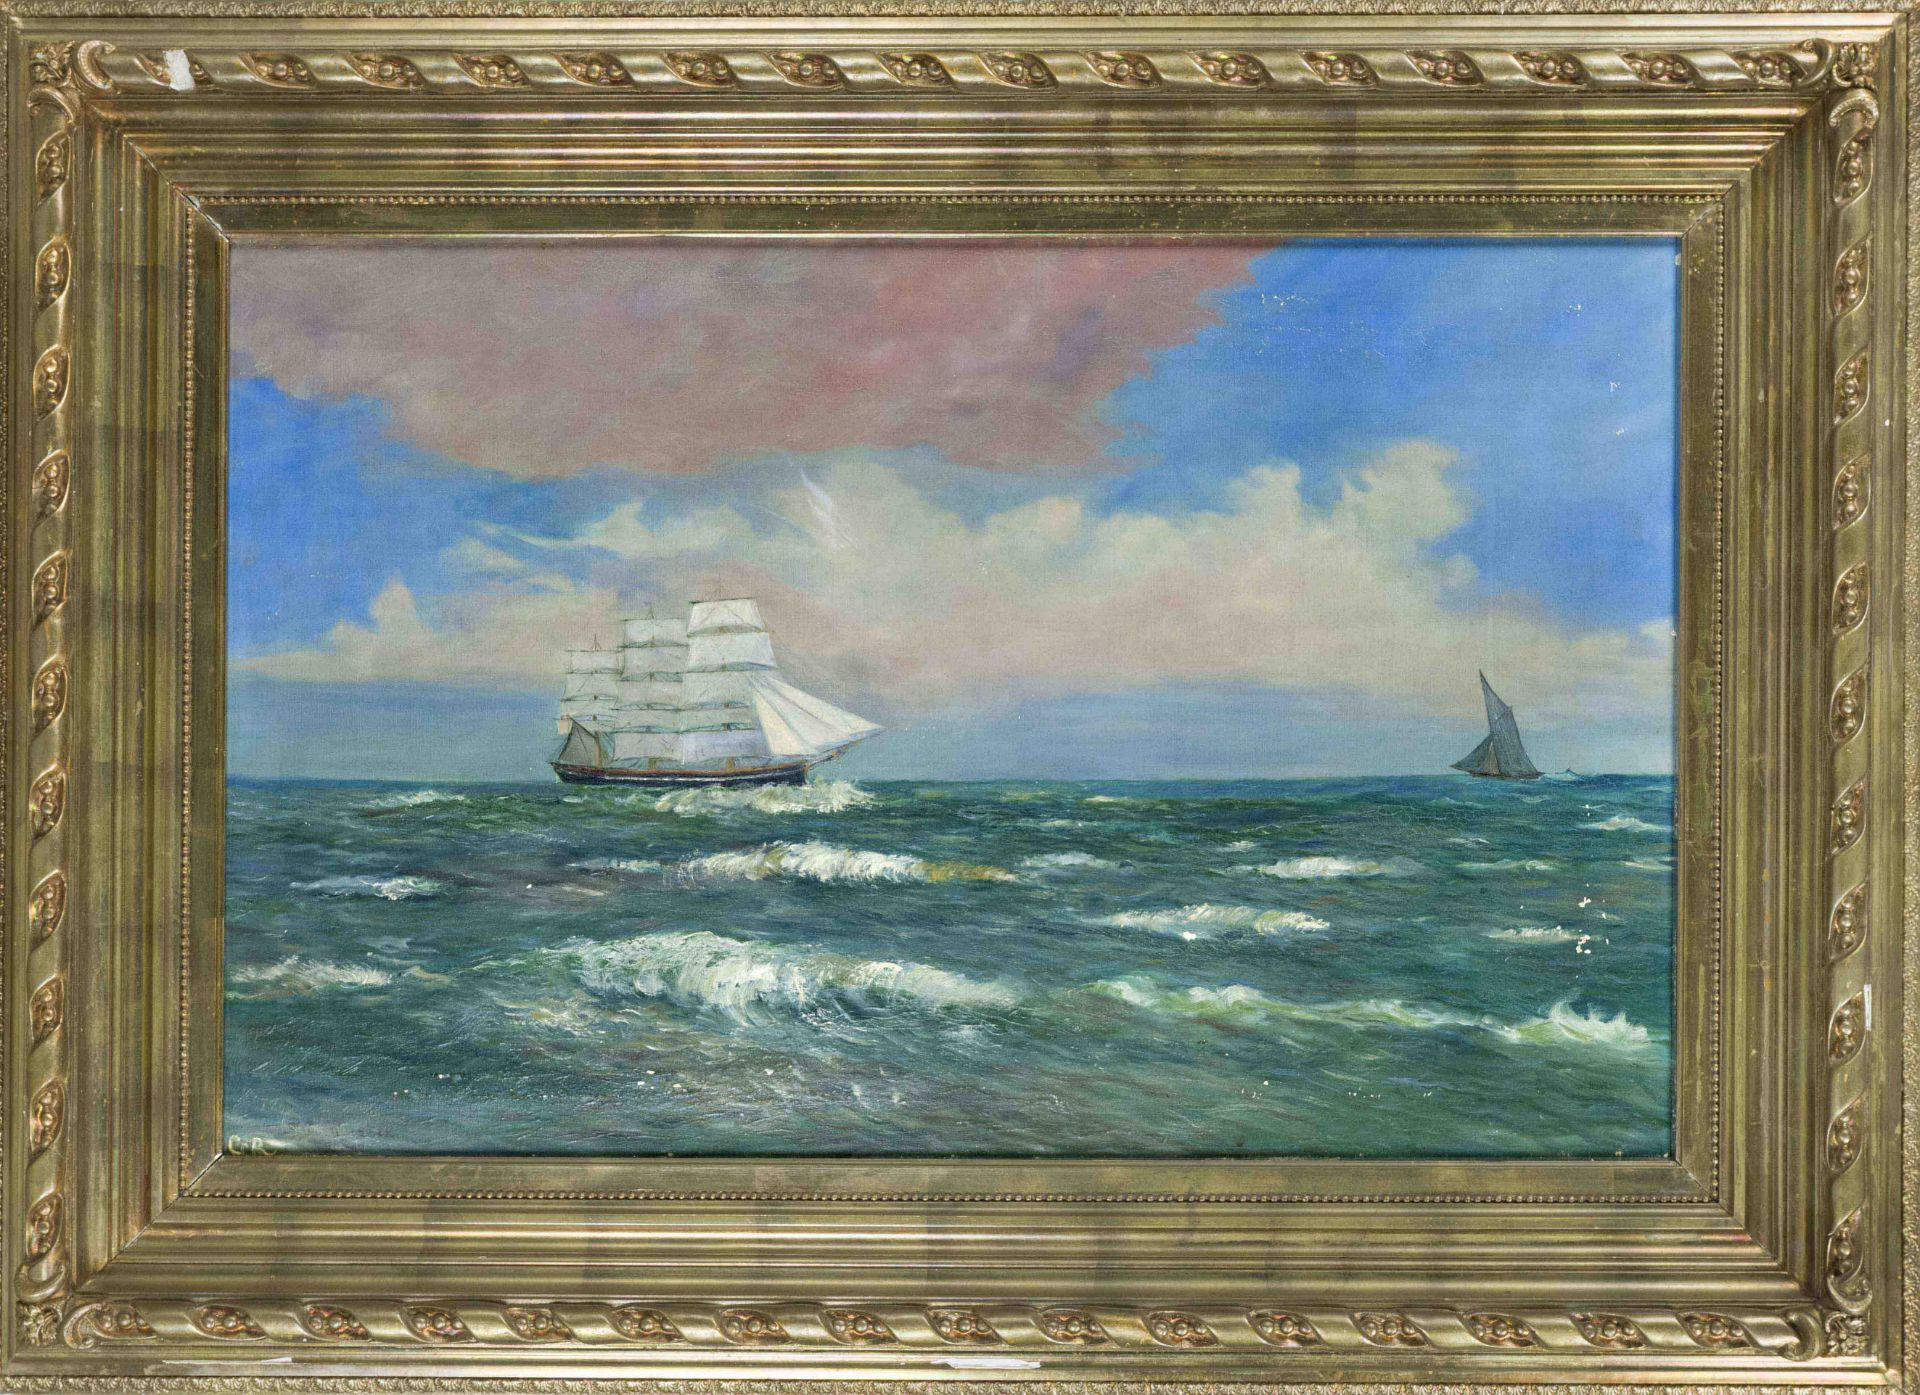 Monogrammist C.R., marine painter c. 1900, large seascape with sailing ships, oil on canvas,